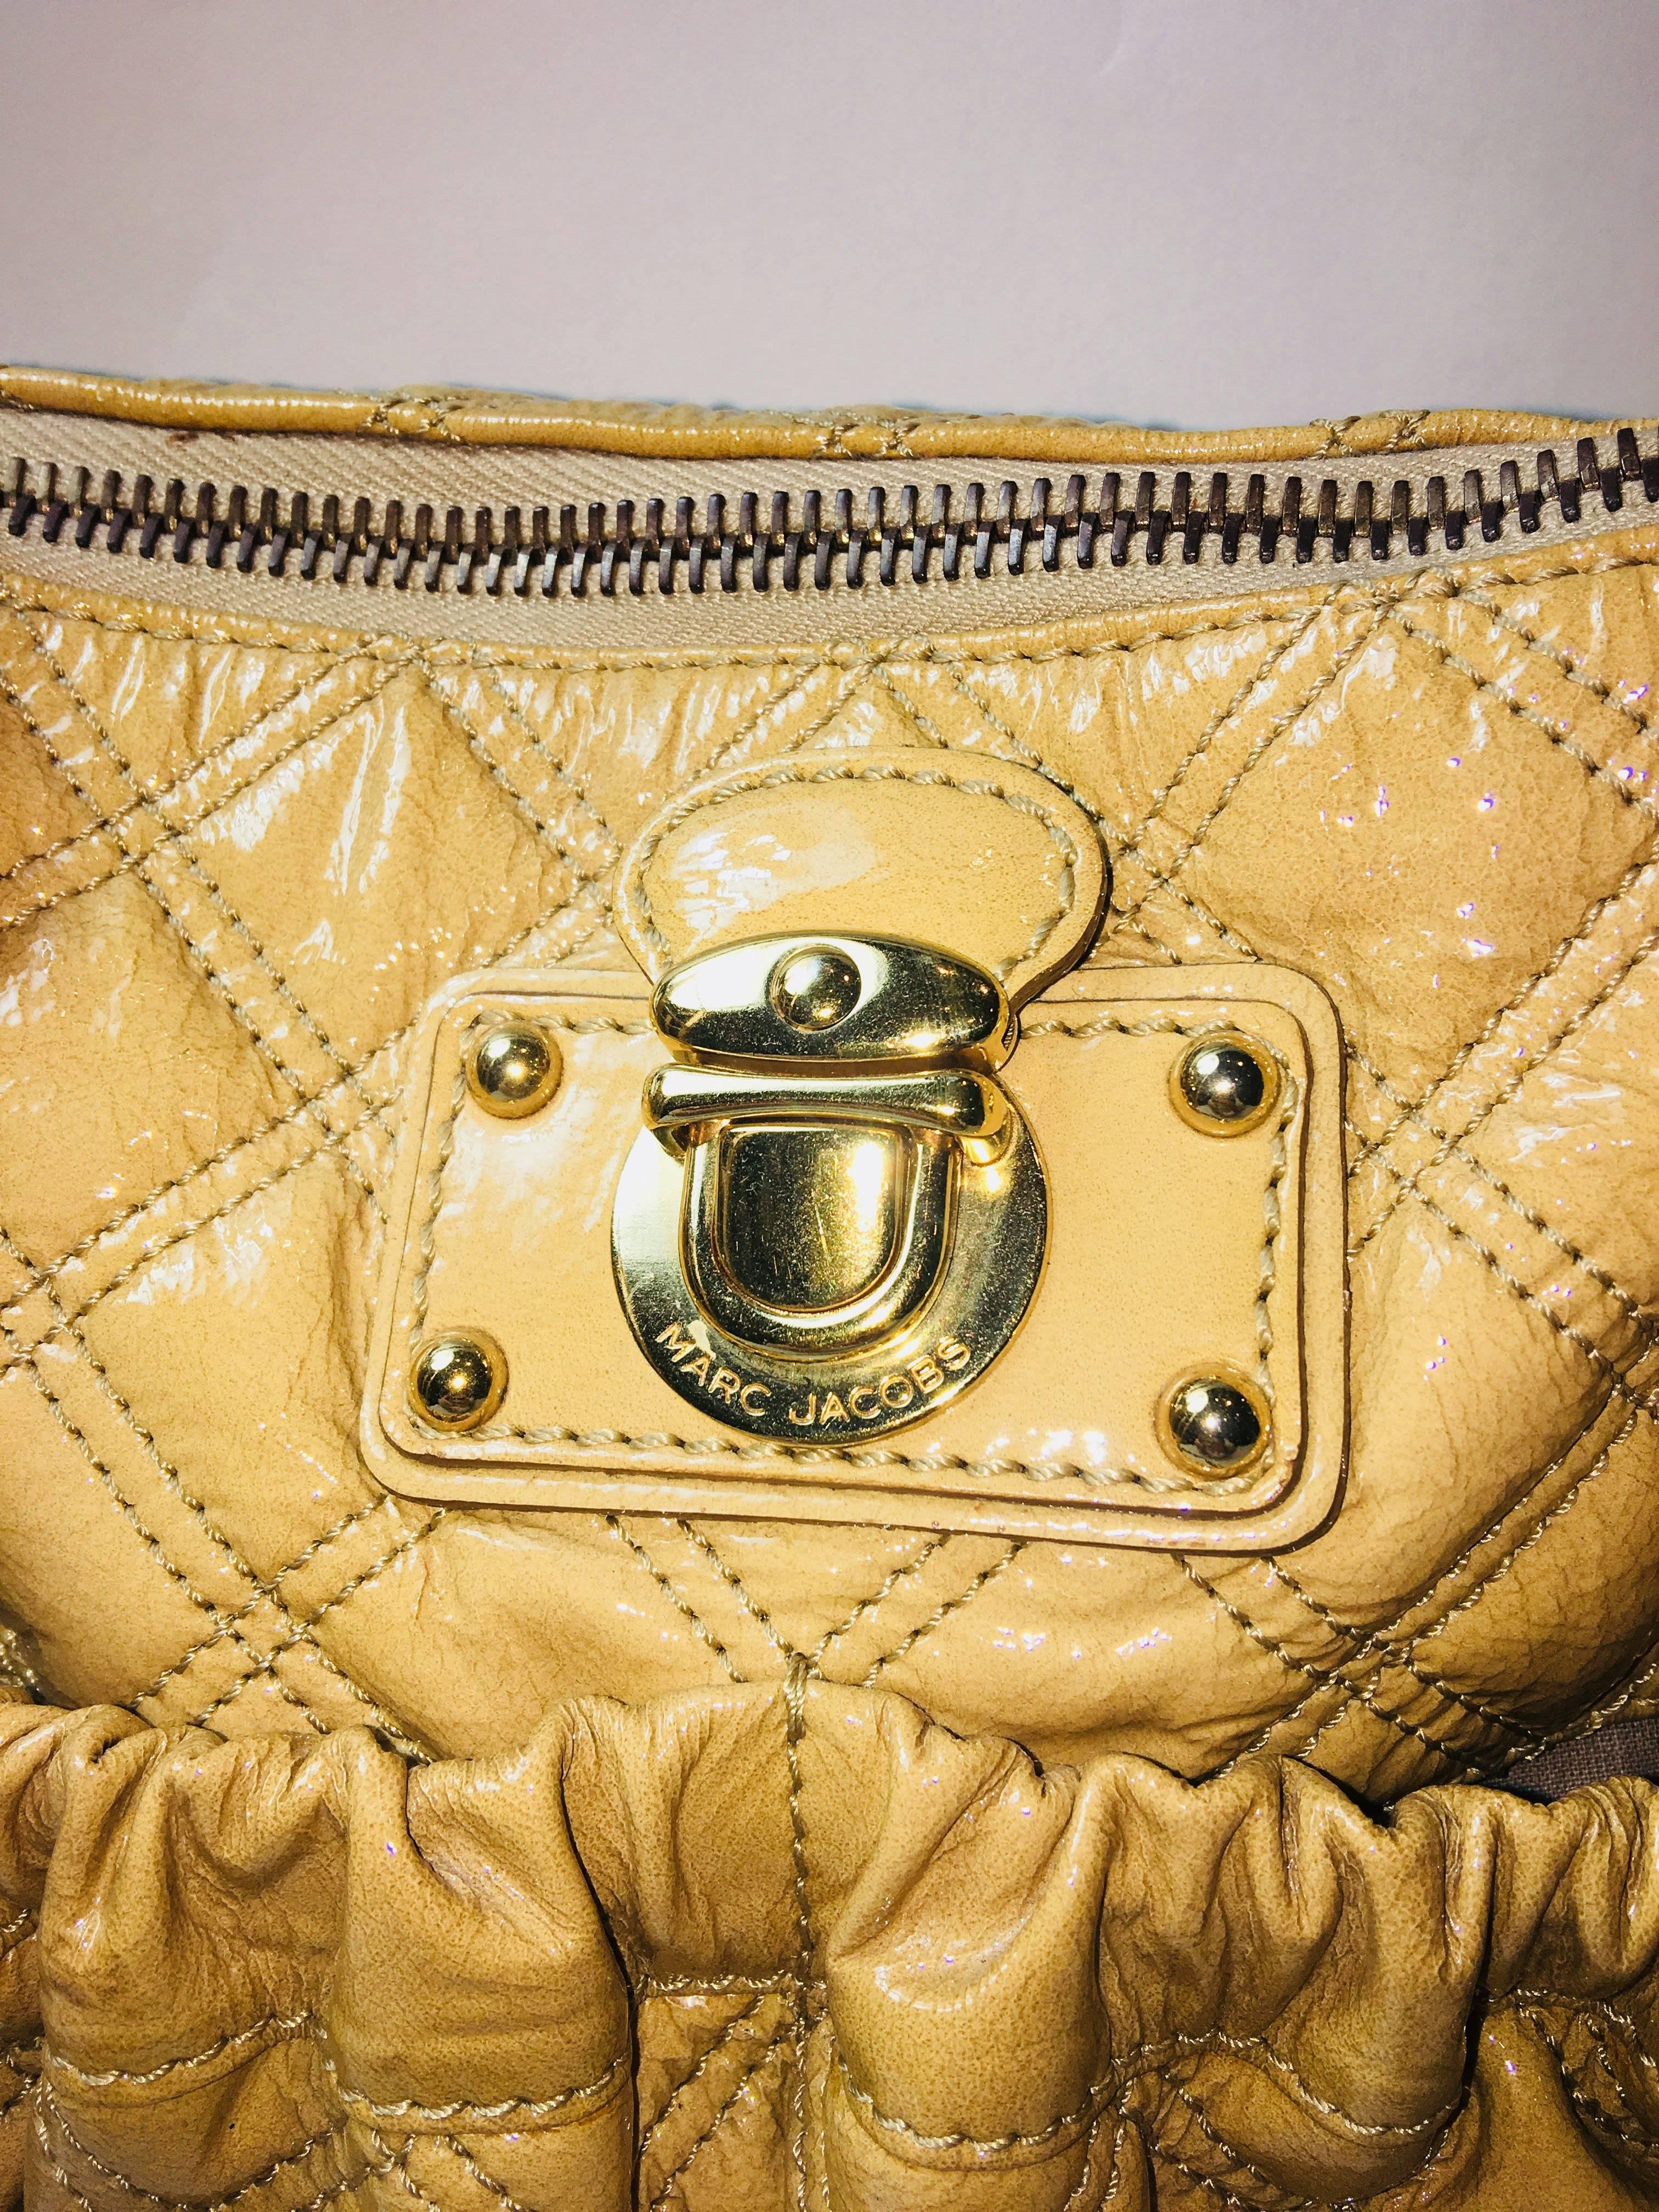 marc jacobs patent leather handbags